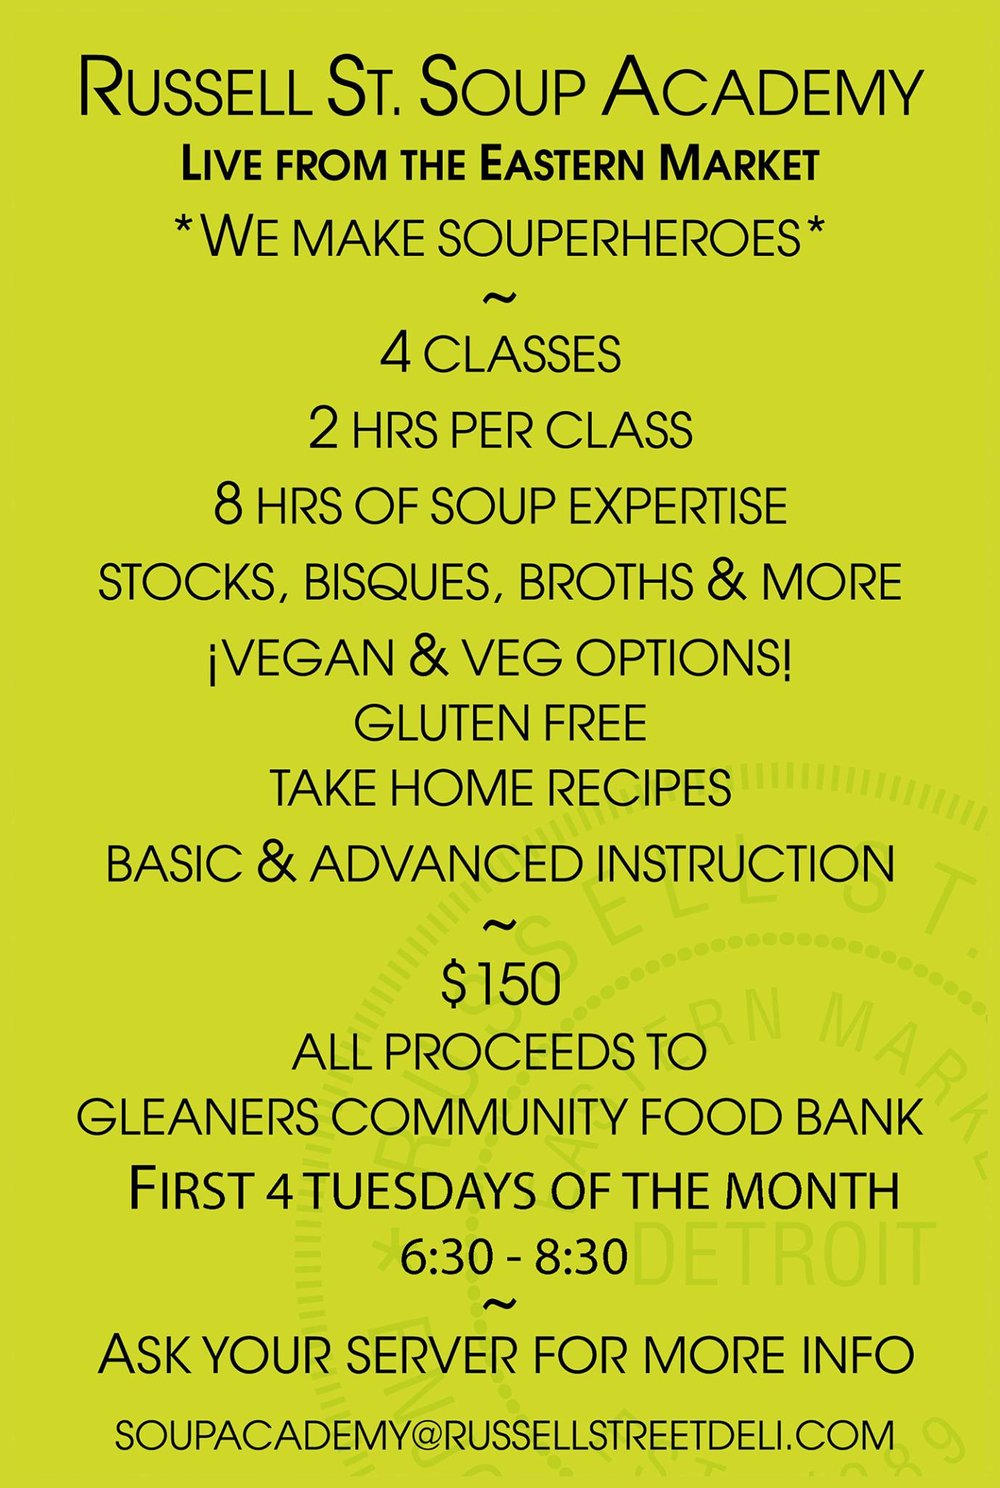  "We make souperheroes!" 4-week Soup Academy at Russell Street Deli.&nbsp;&nbsp;100% of the proceeds goes to Gleaners Community Food Bank. soupacademy@russellstreetdeli.com 